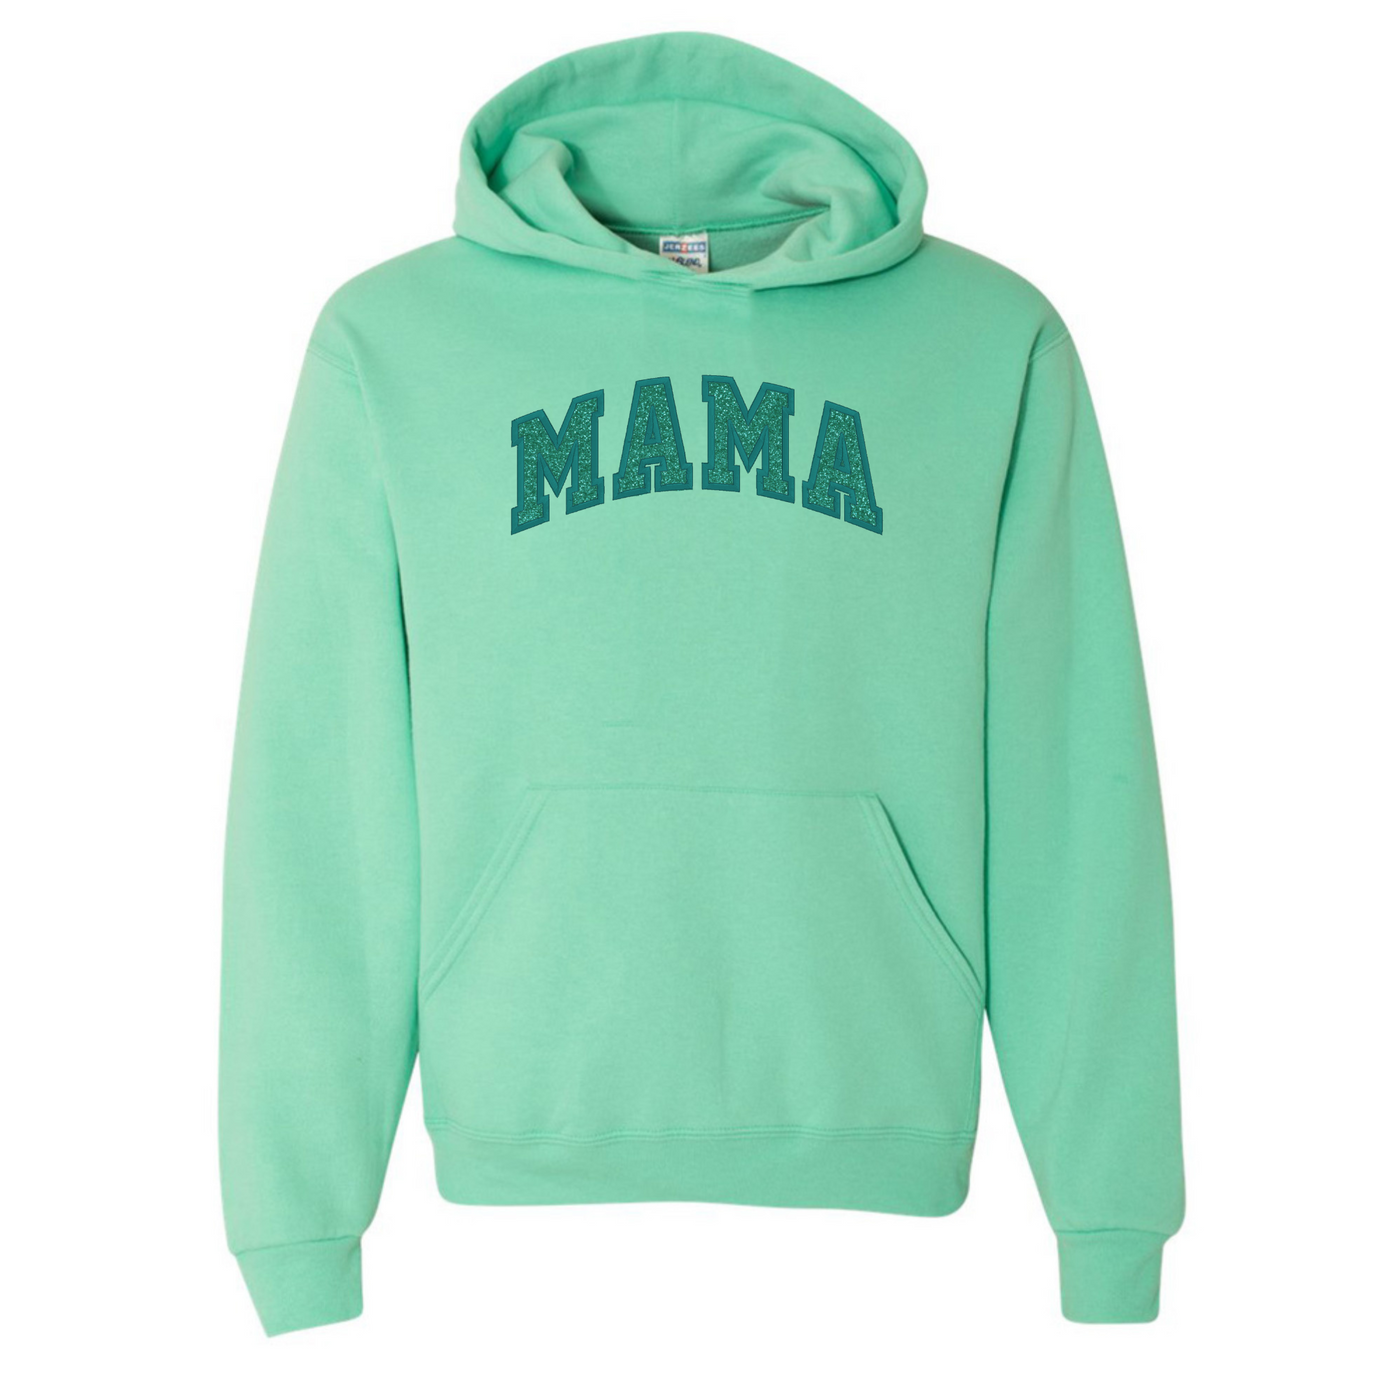 Glitter Embroidery ‘Mama’ Hoodie